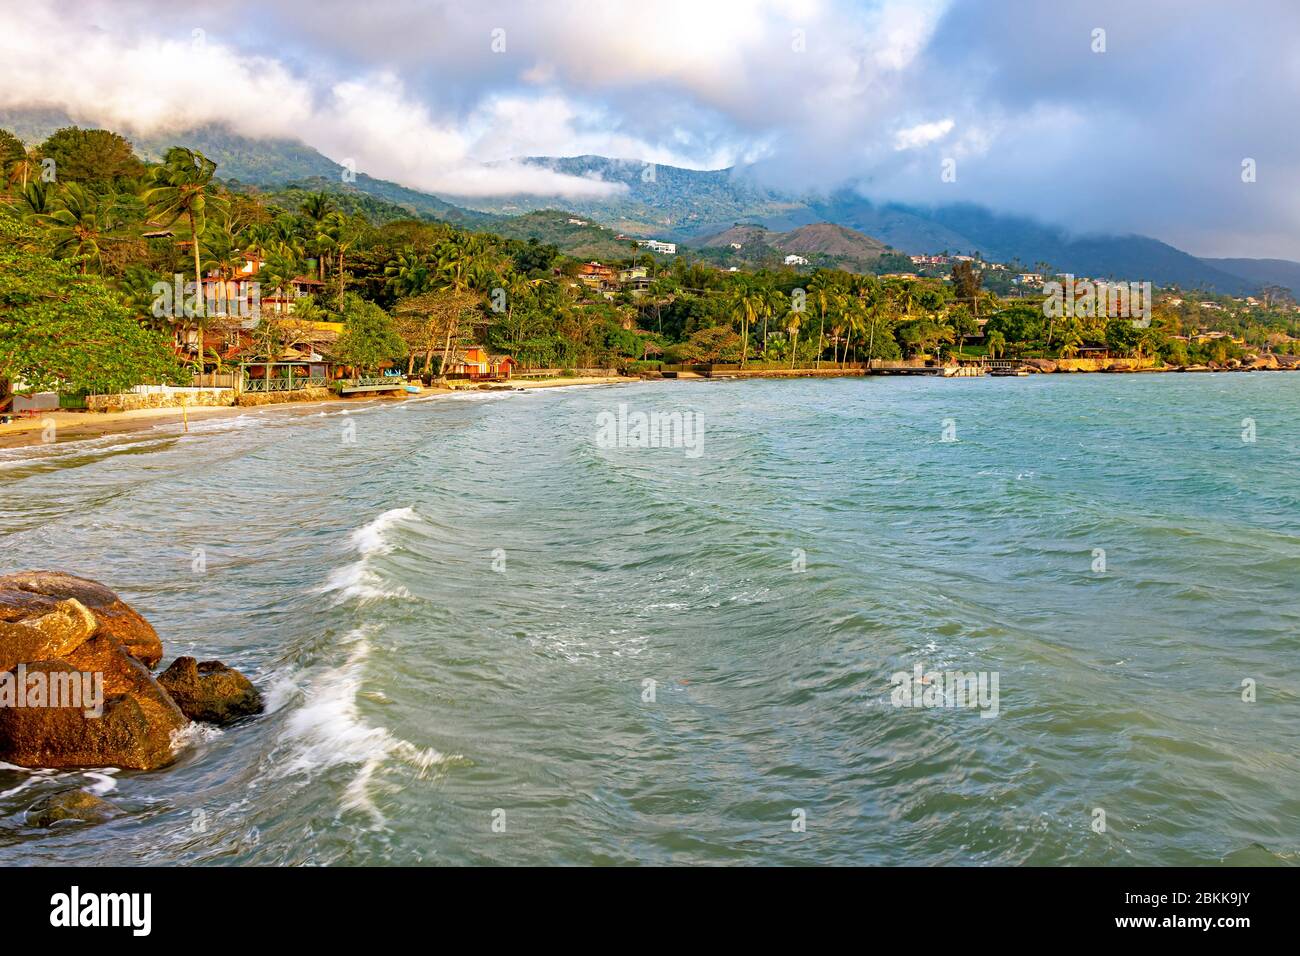 Tropical beach on the island of Ilhabela north coast of Sao Paulo, Brazil Stock Photo